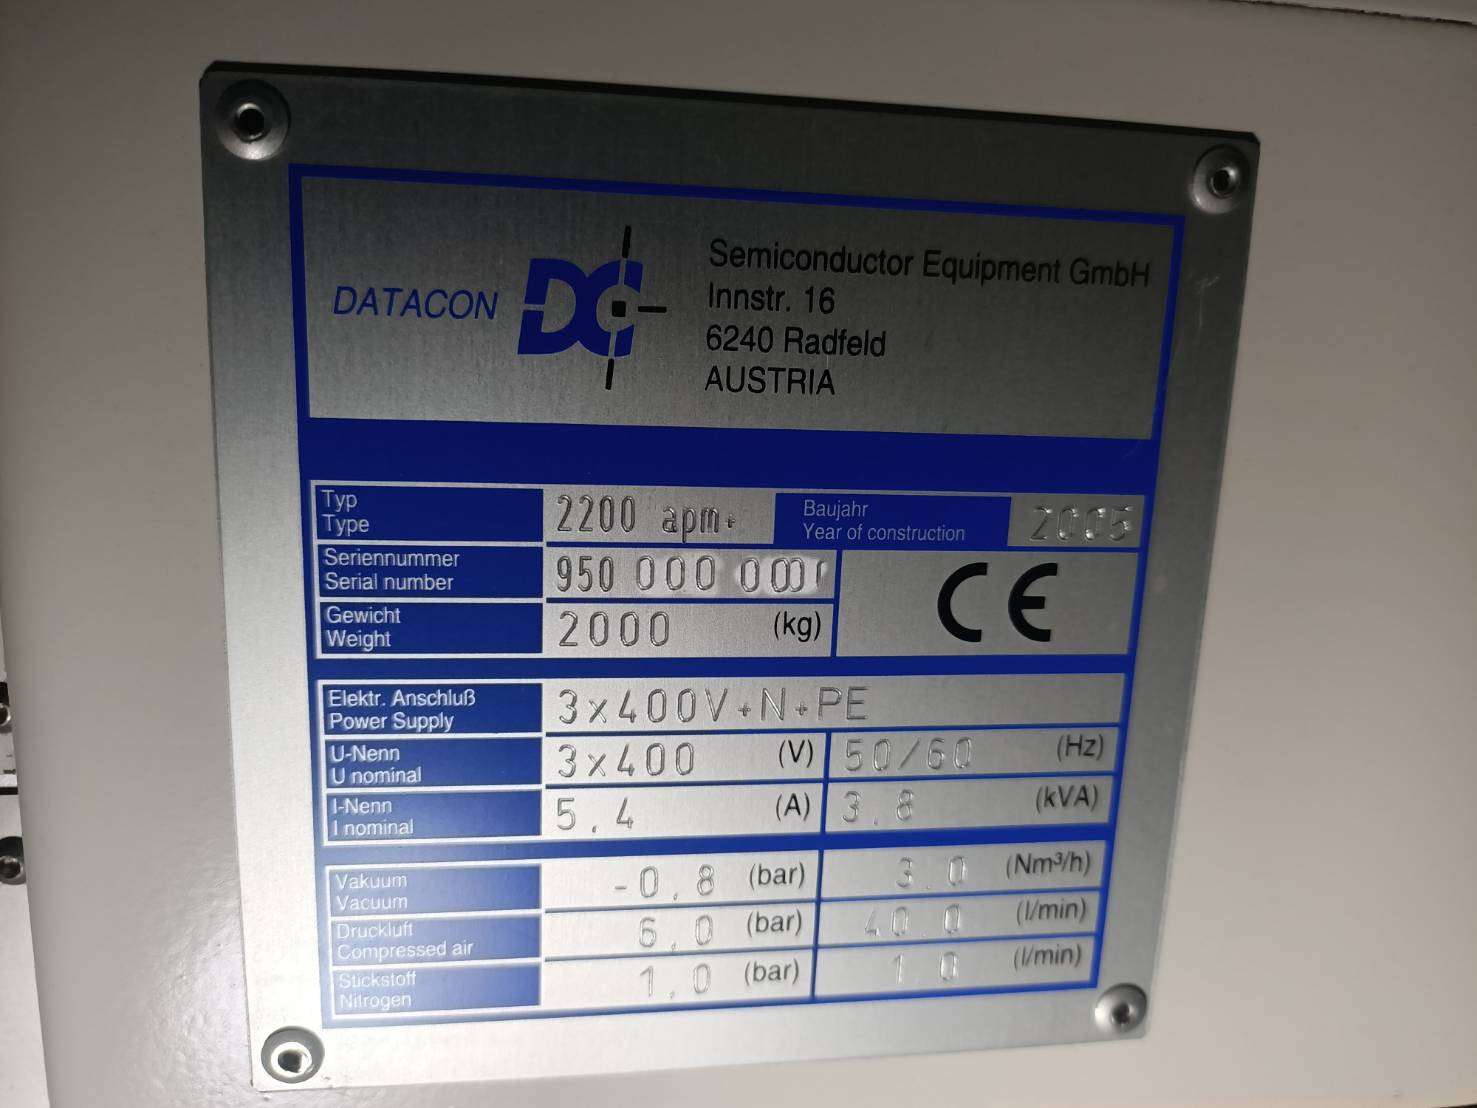 DATACON / BESI 2200 apm Plus